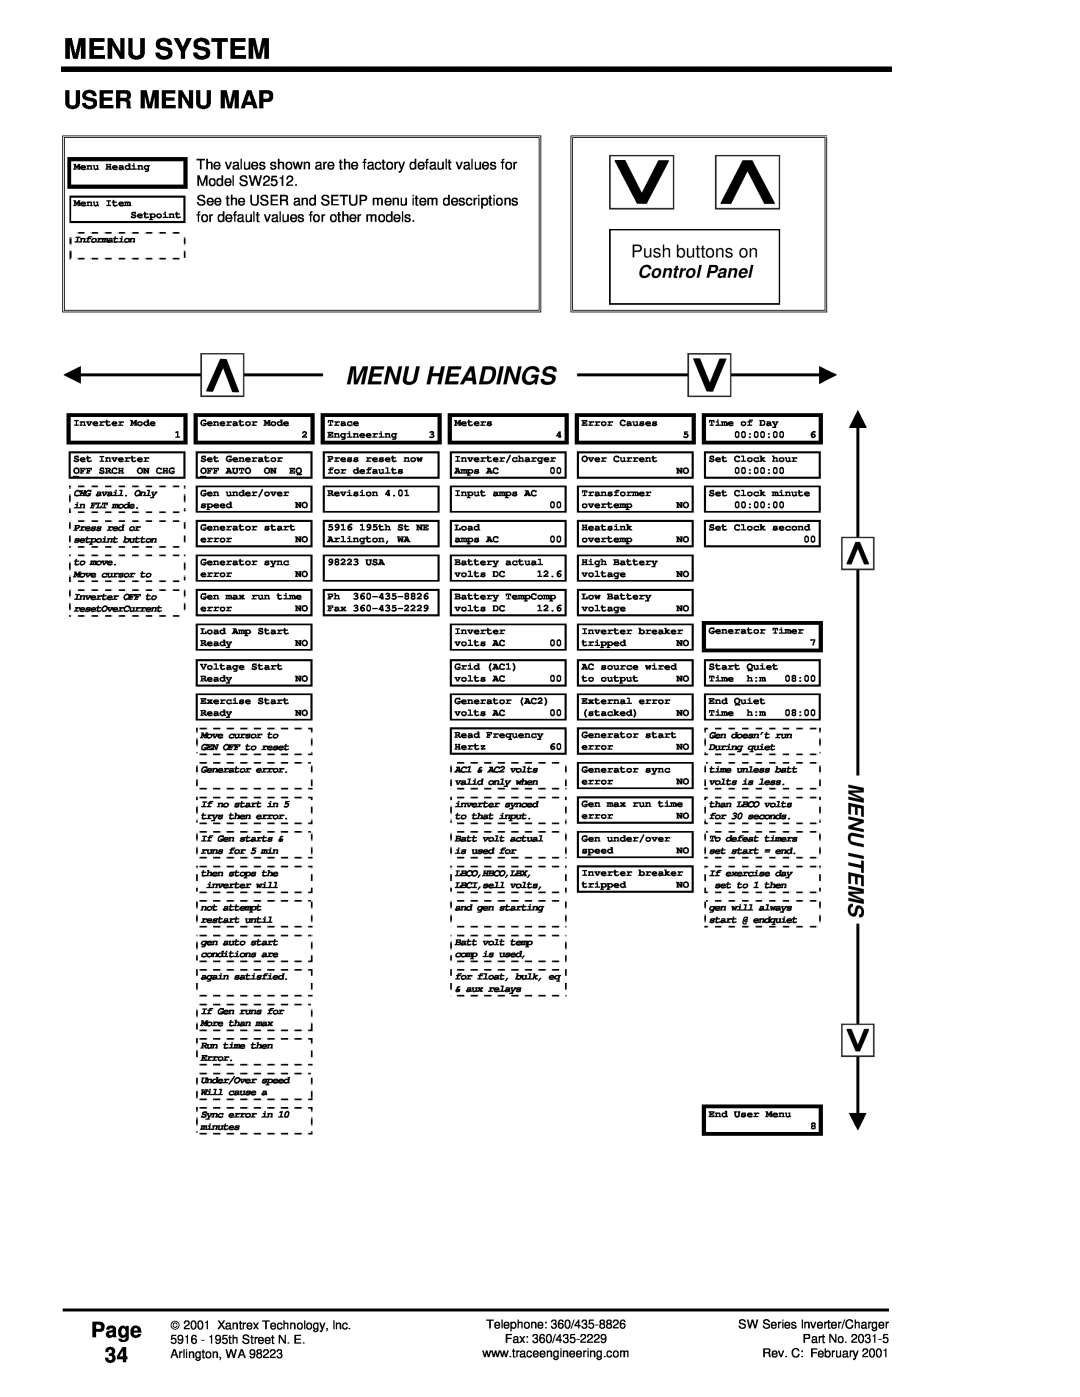 Xantrex Technology SW Series Menu System, User Menu Map, Menu Headings, Menu Items, Page 34, Push buttons on, Part No 